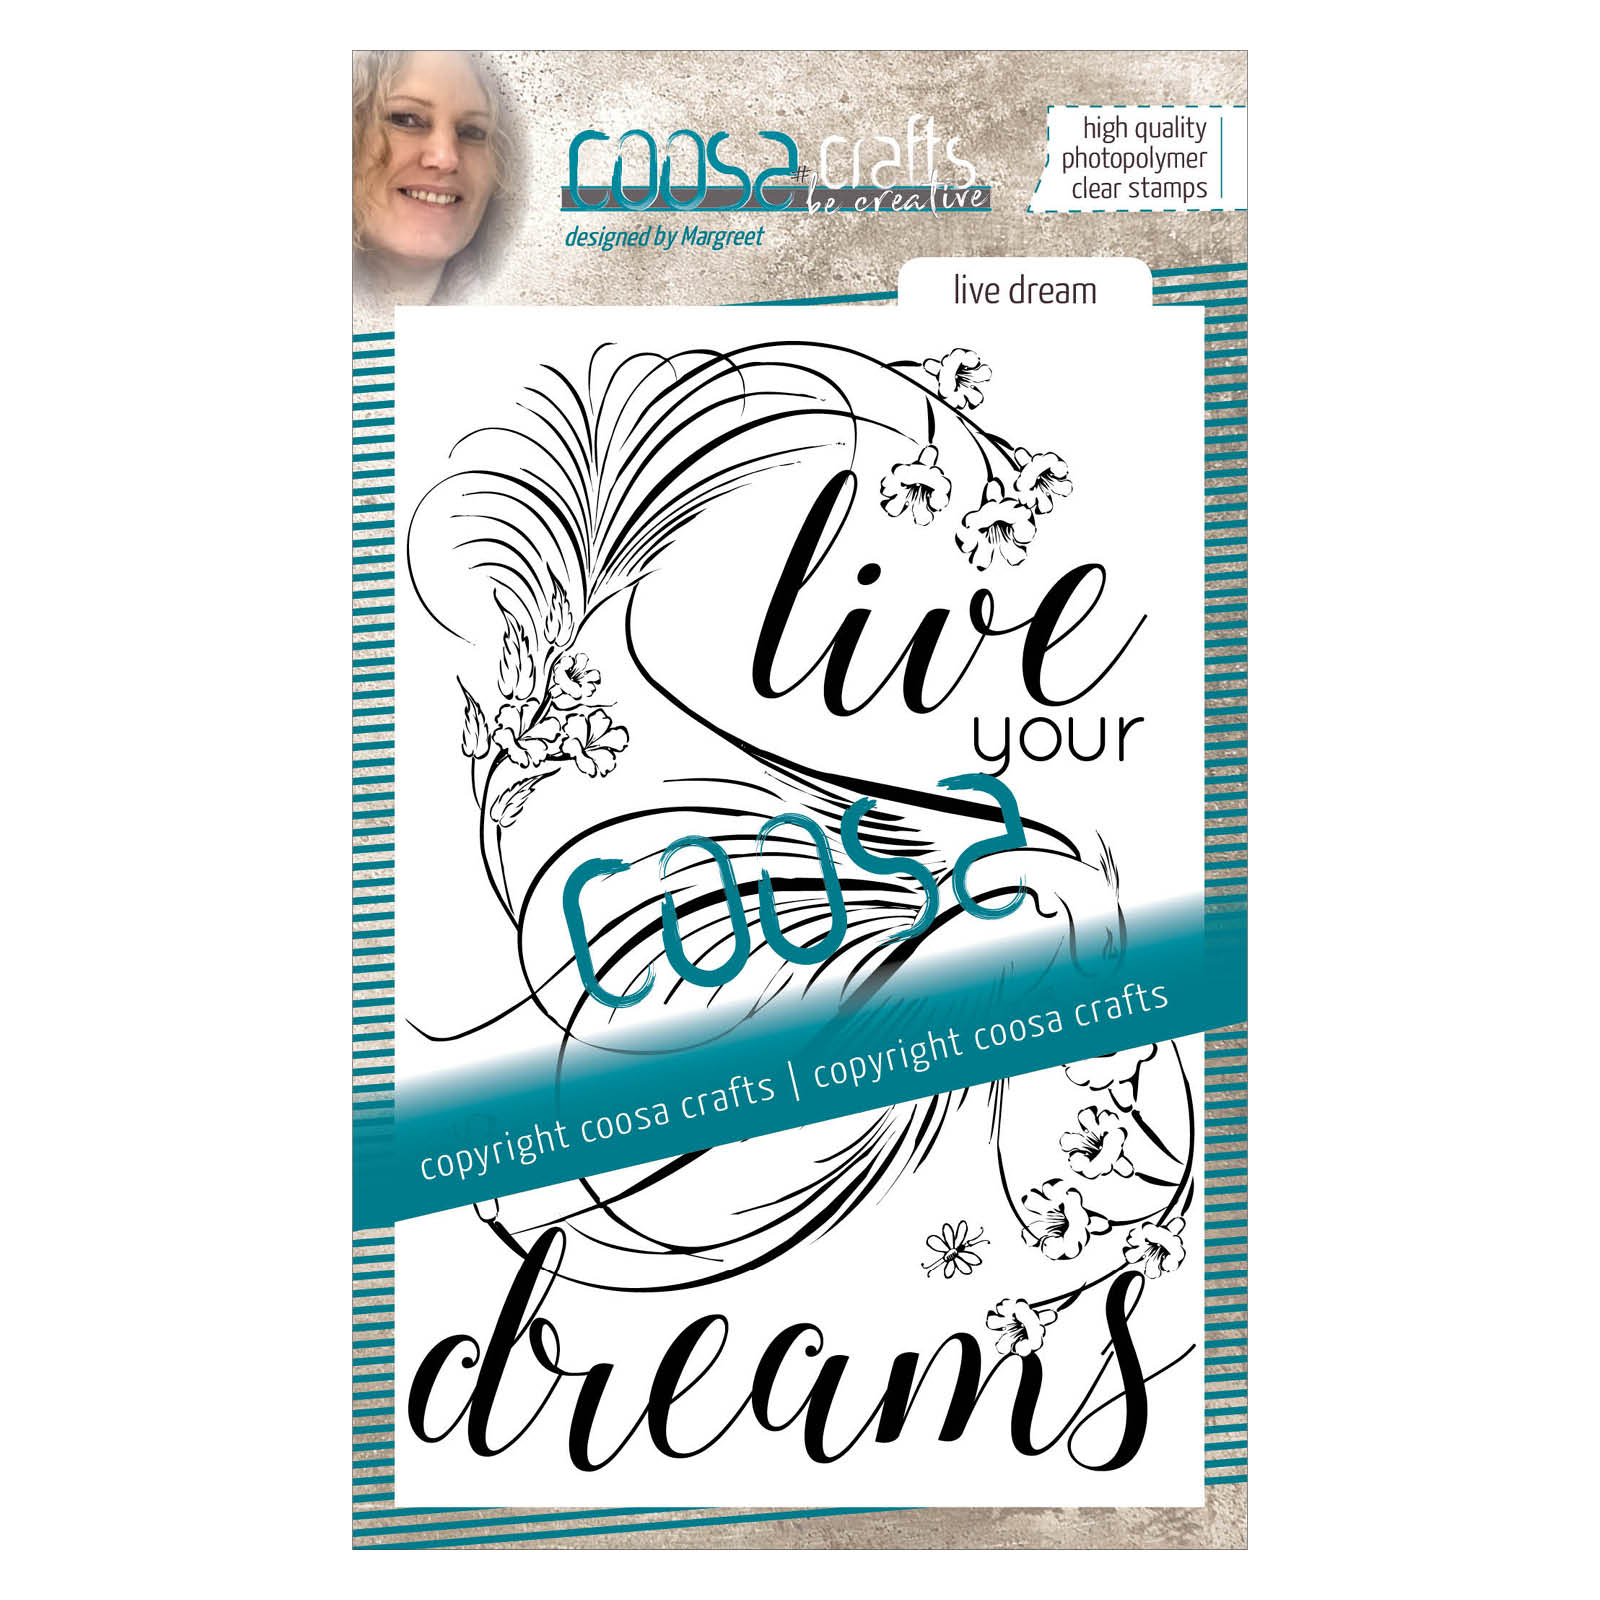 COOSA Crafts • Clear stempel Engels #3 Birds "Live dream"